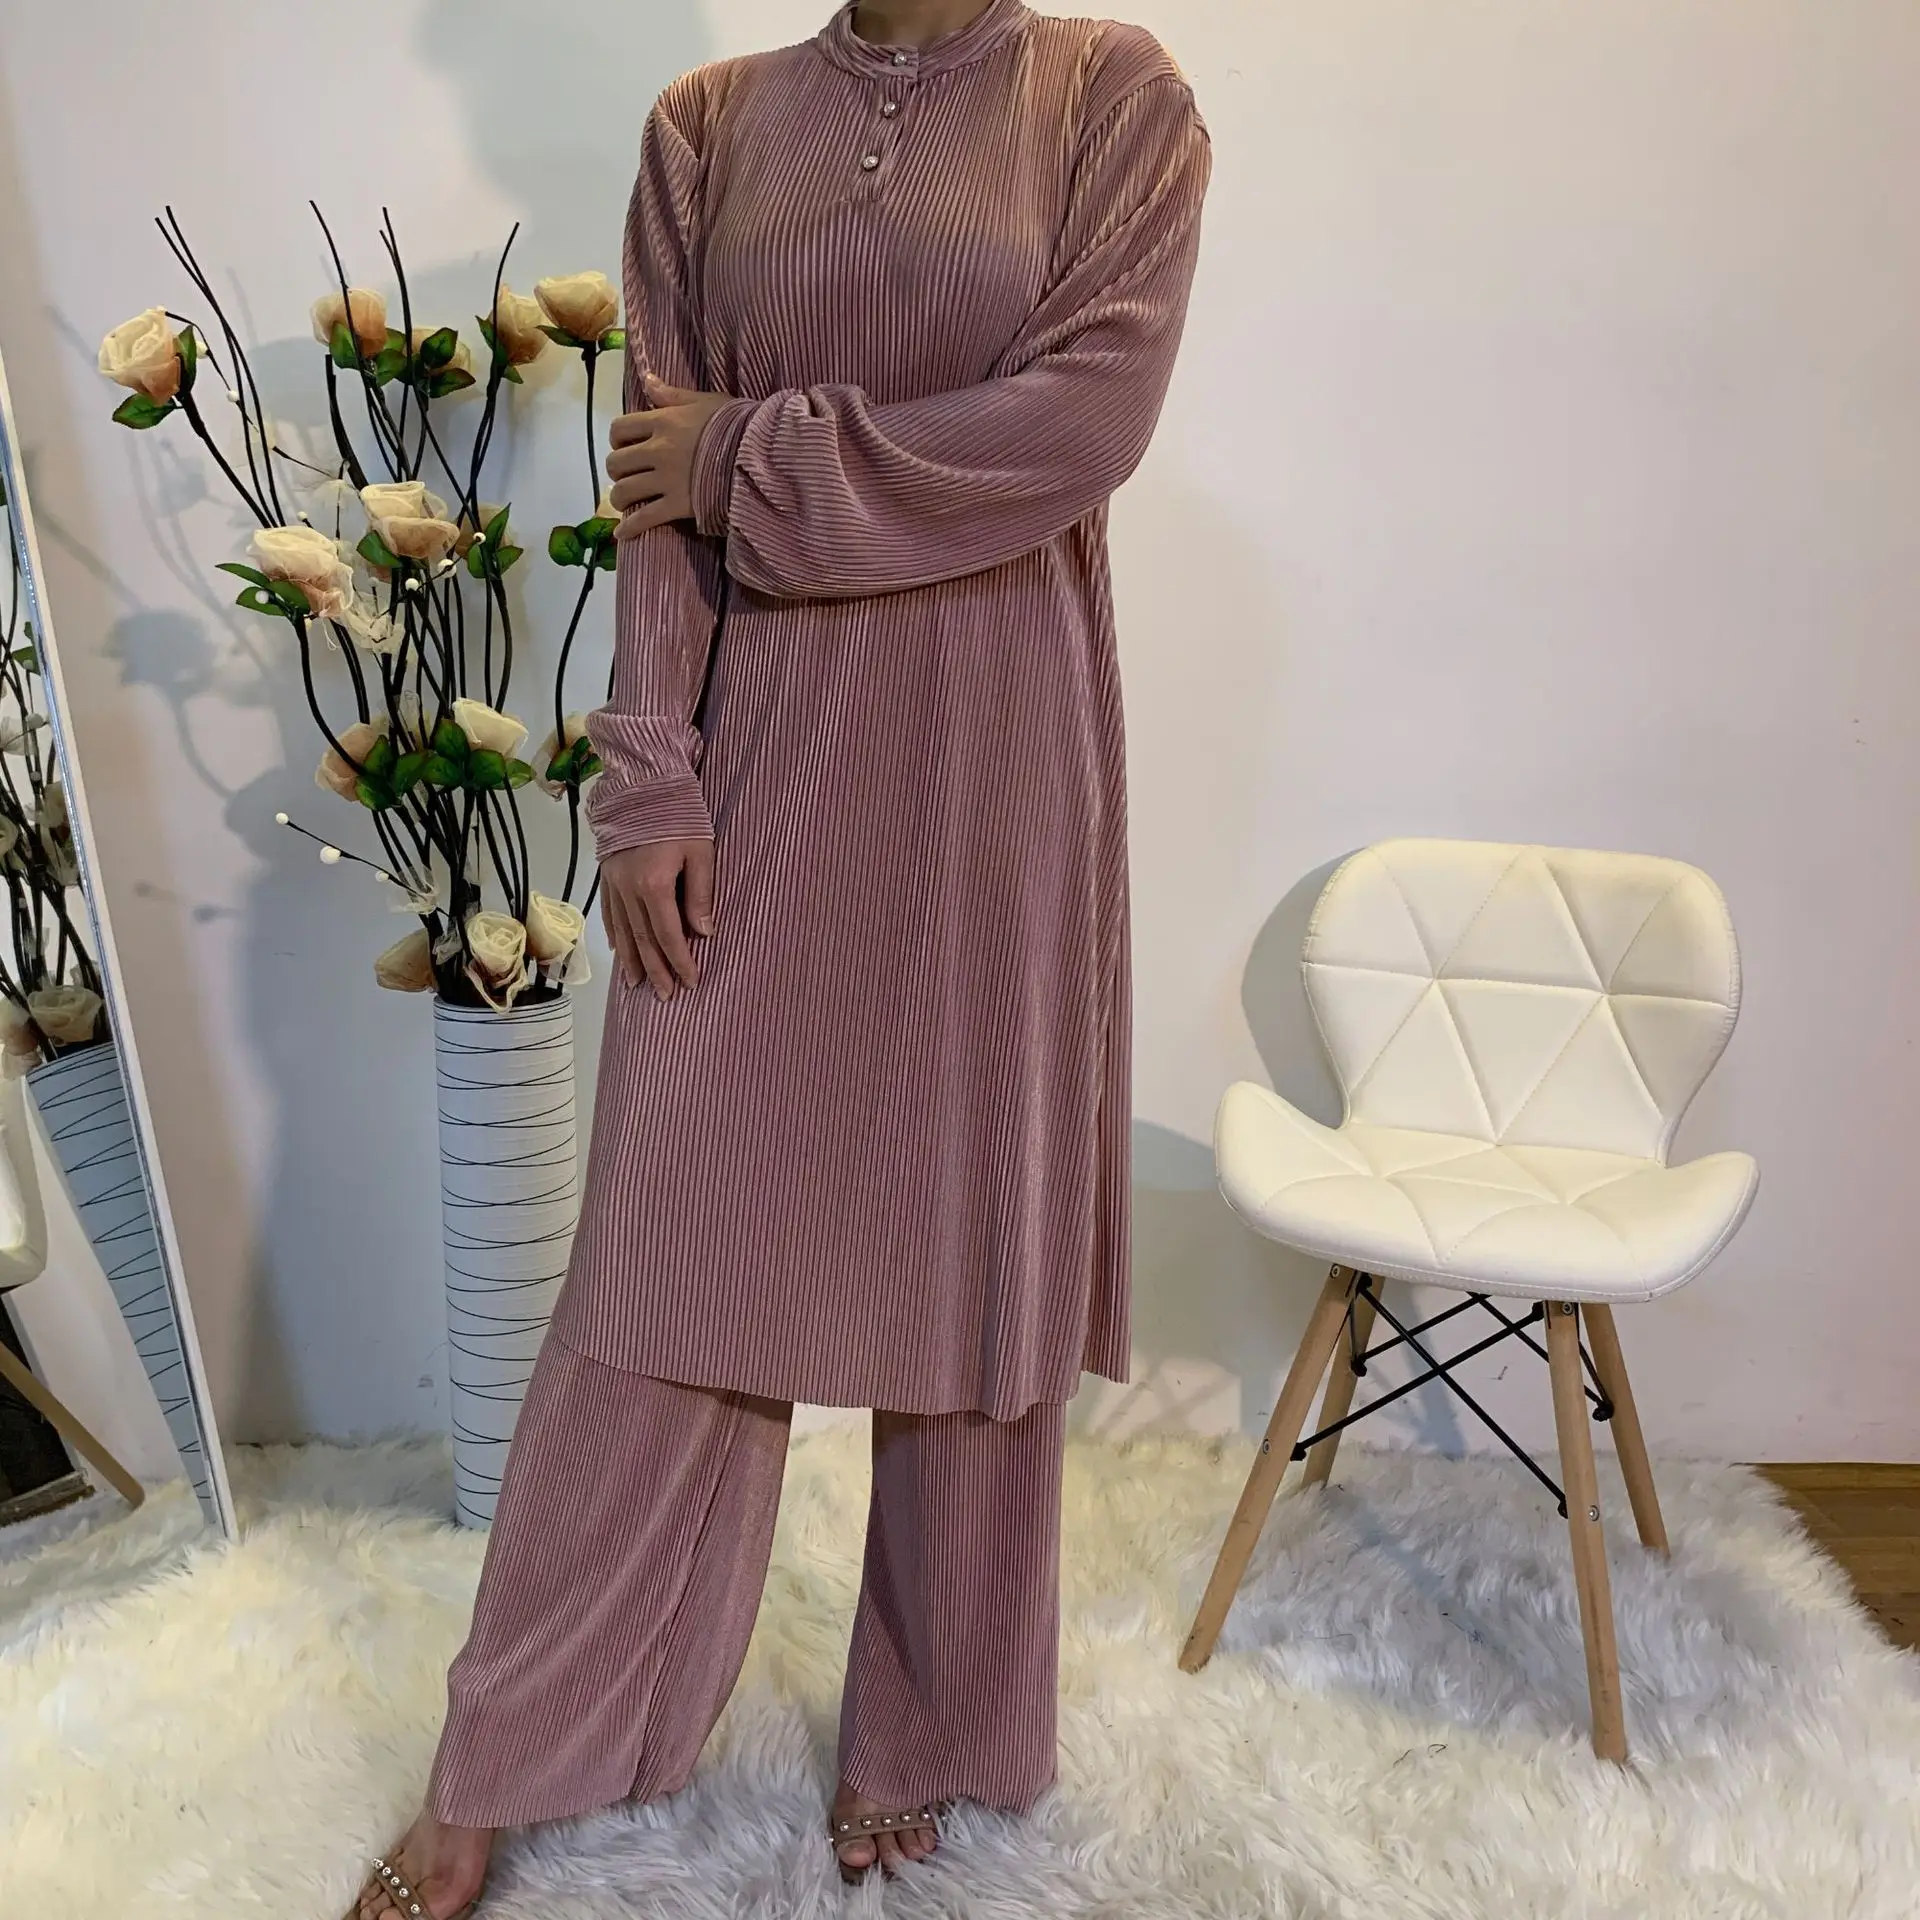 2021 Muslim Clothing New Fashion Simple Arabian Pure Color Crimped Muslim Women's Two-piece Set European Clothing Abaya